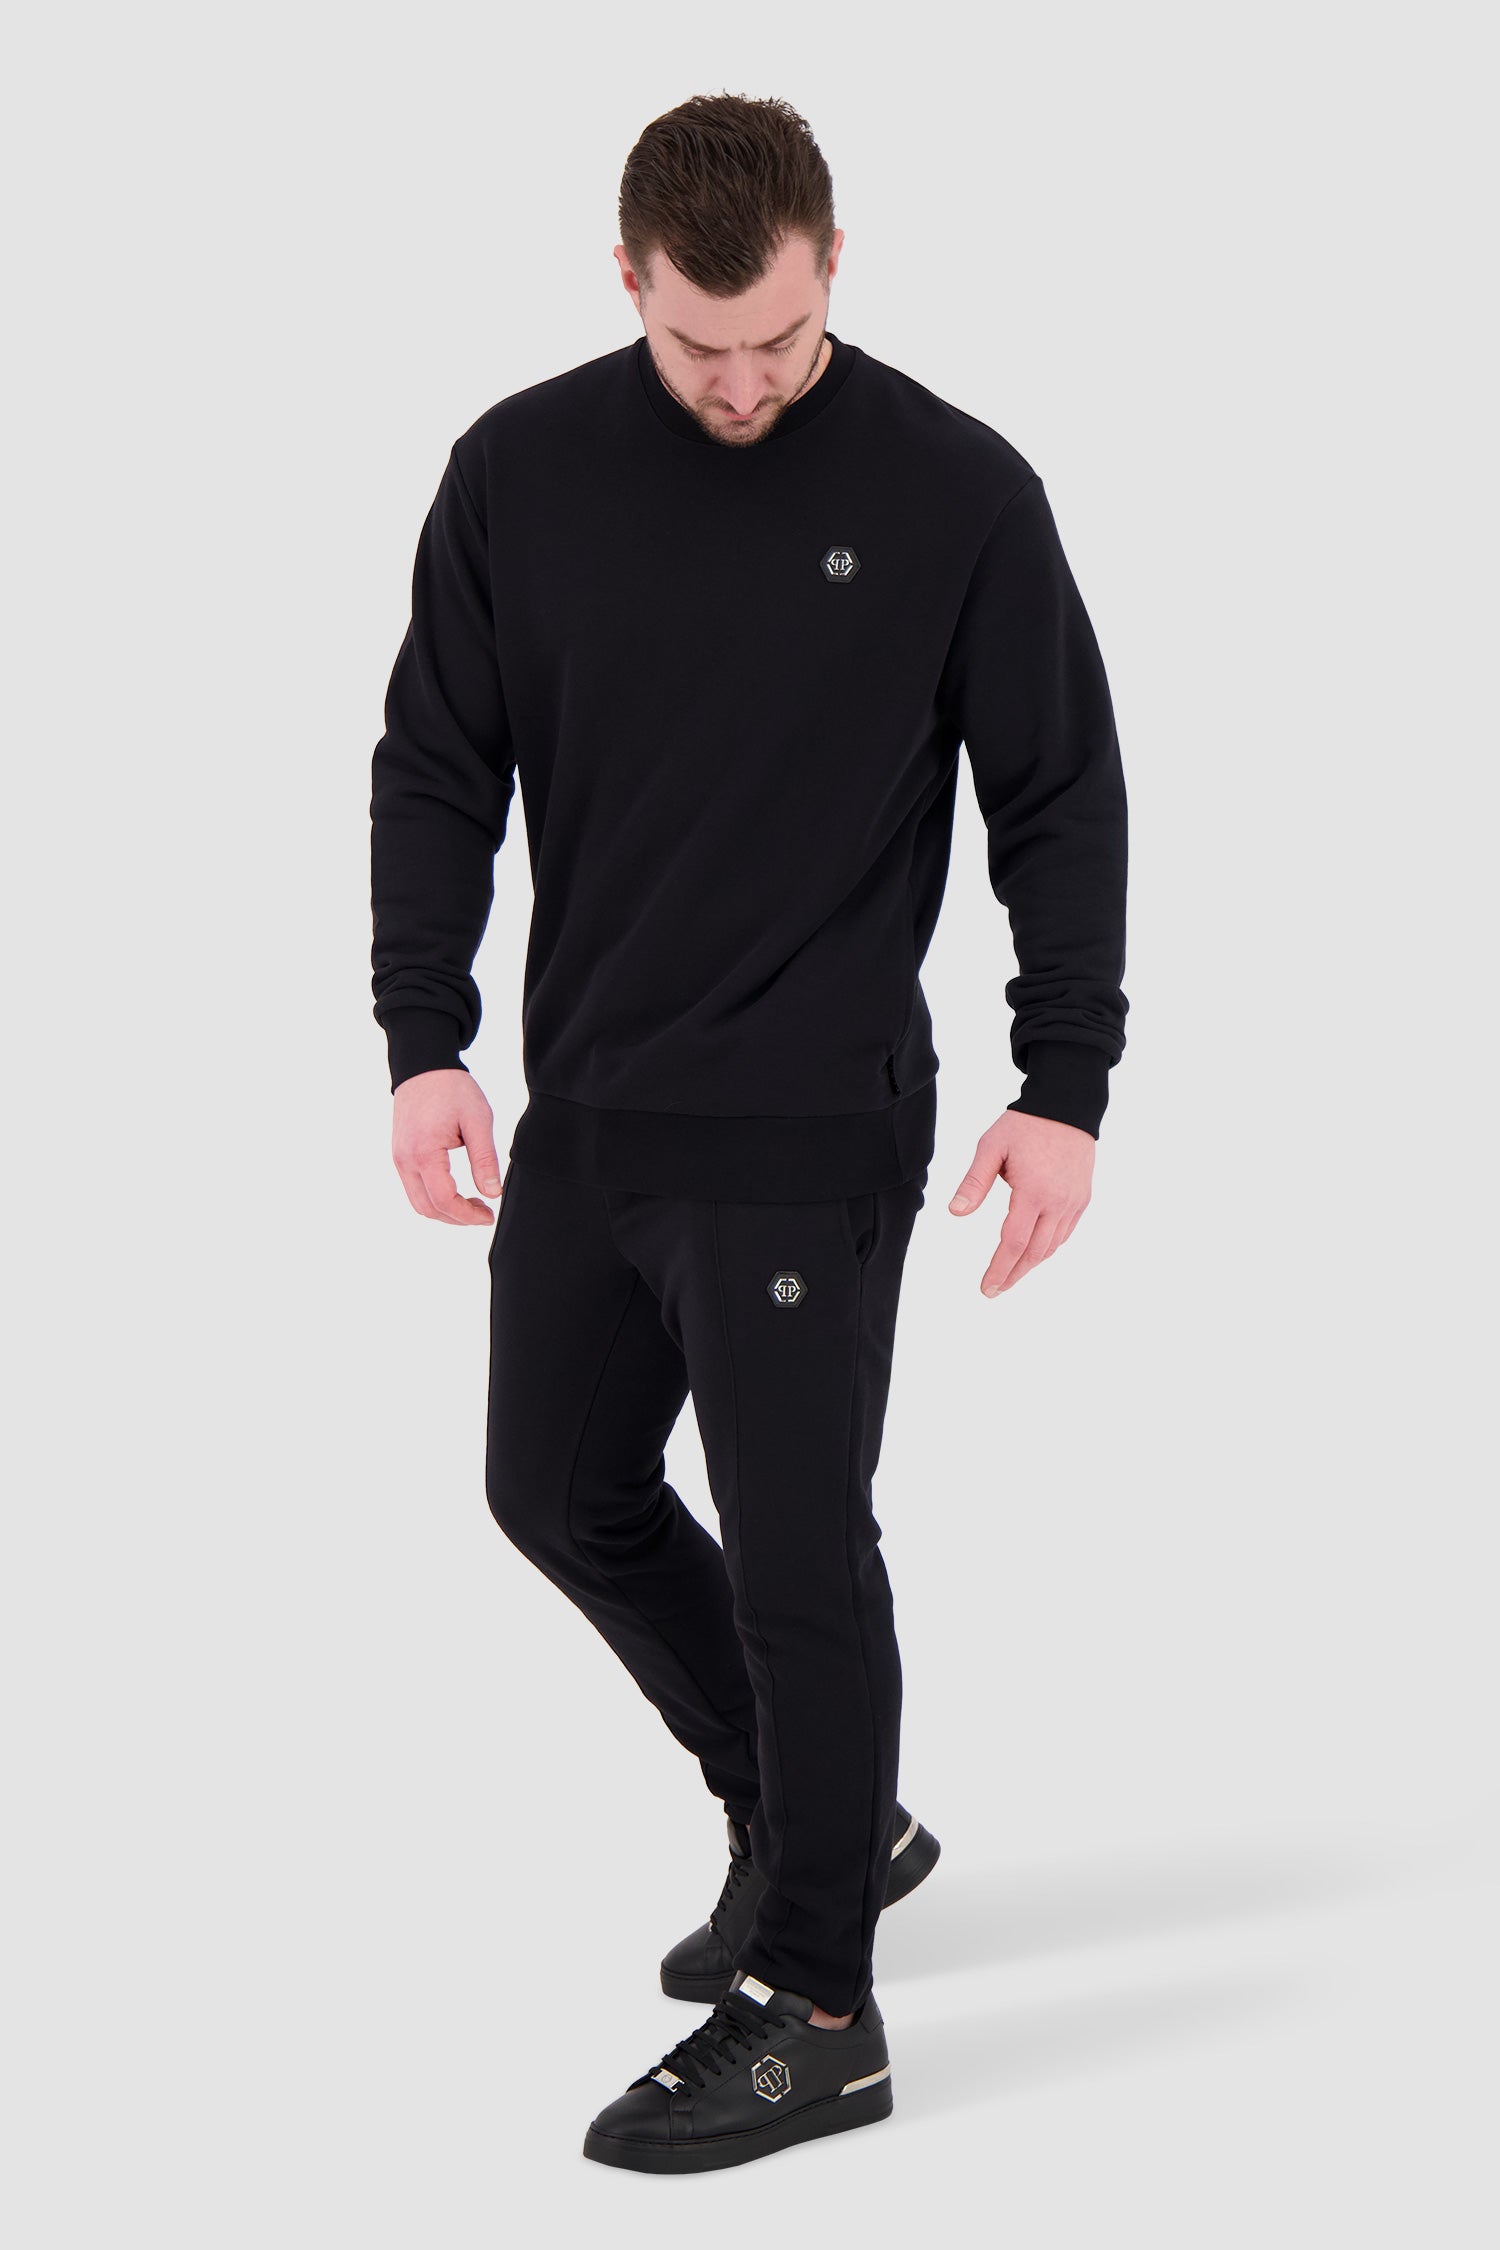 Philipp Plein Black LS Hexagon Sweatshirt